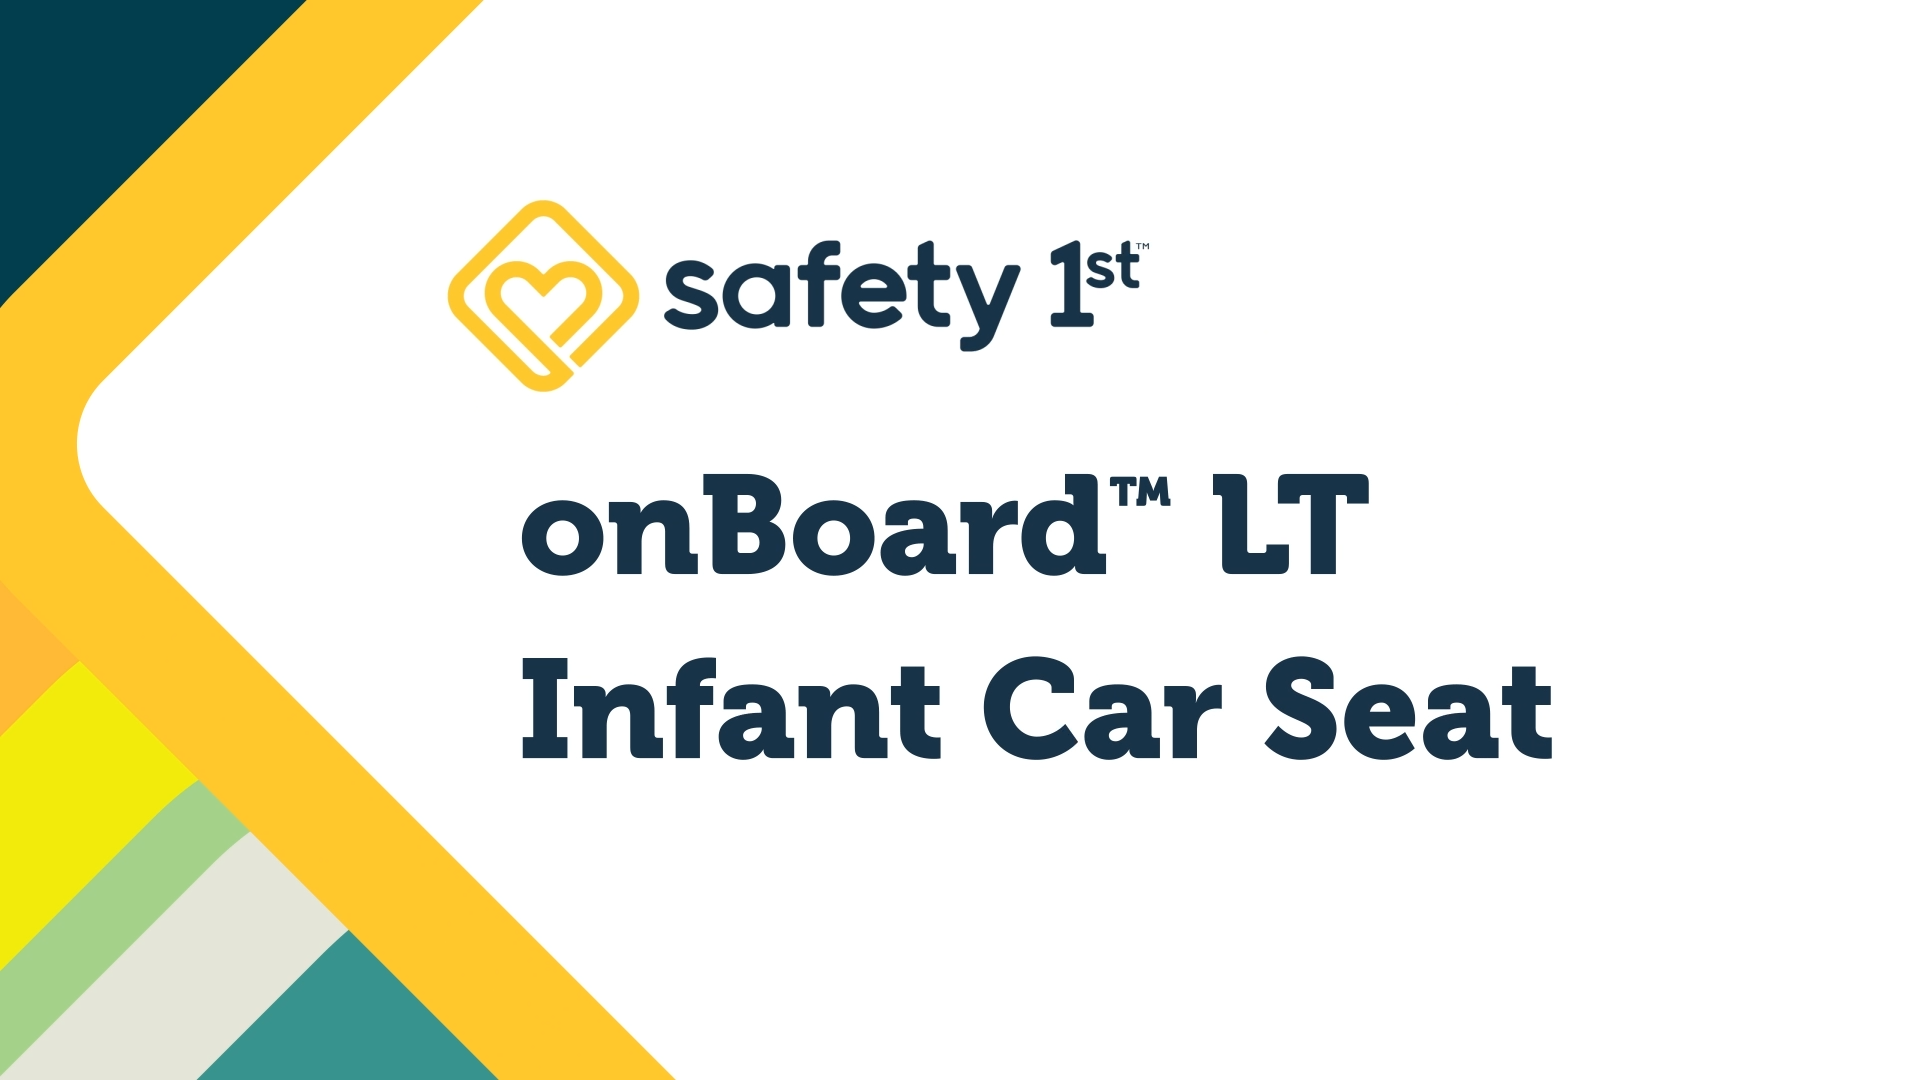 OnBoard LT Infant Car Seat - video